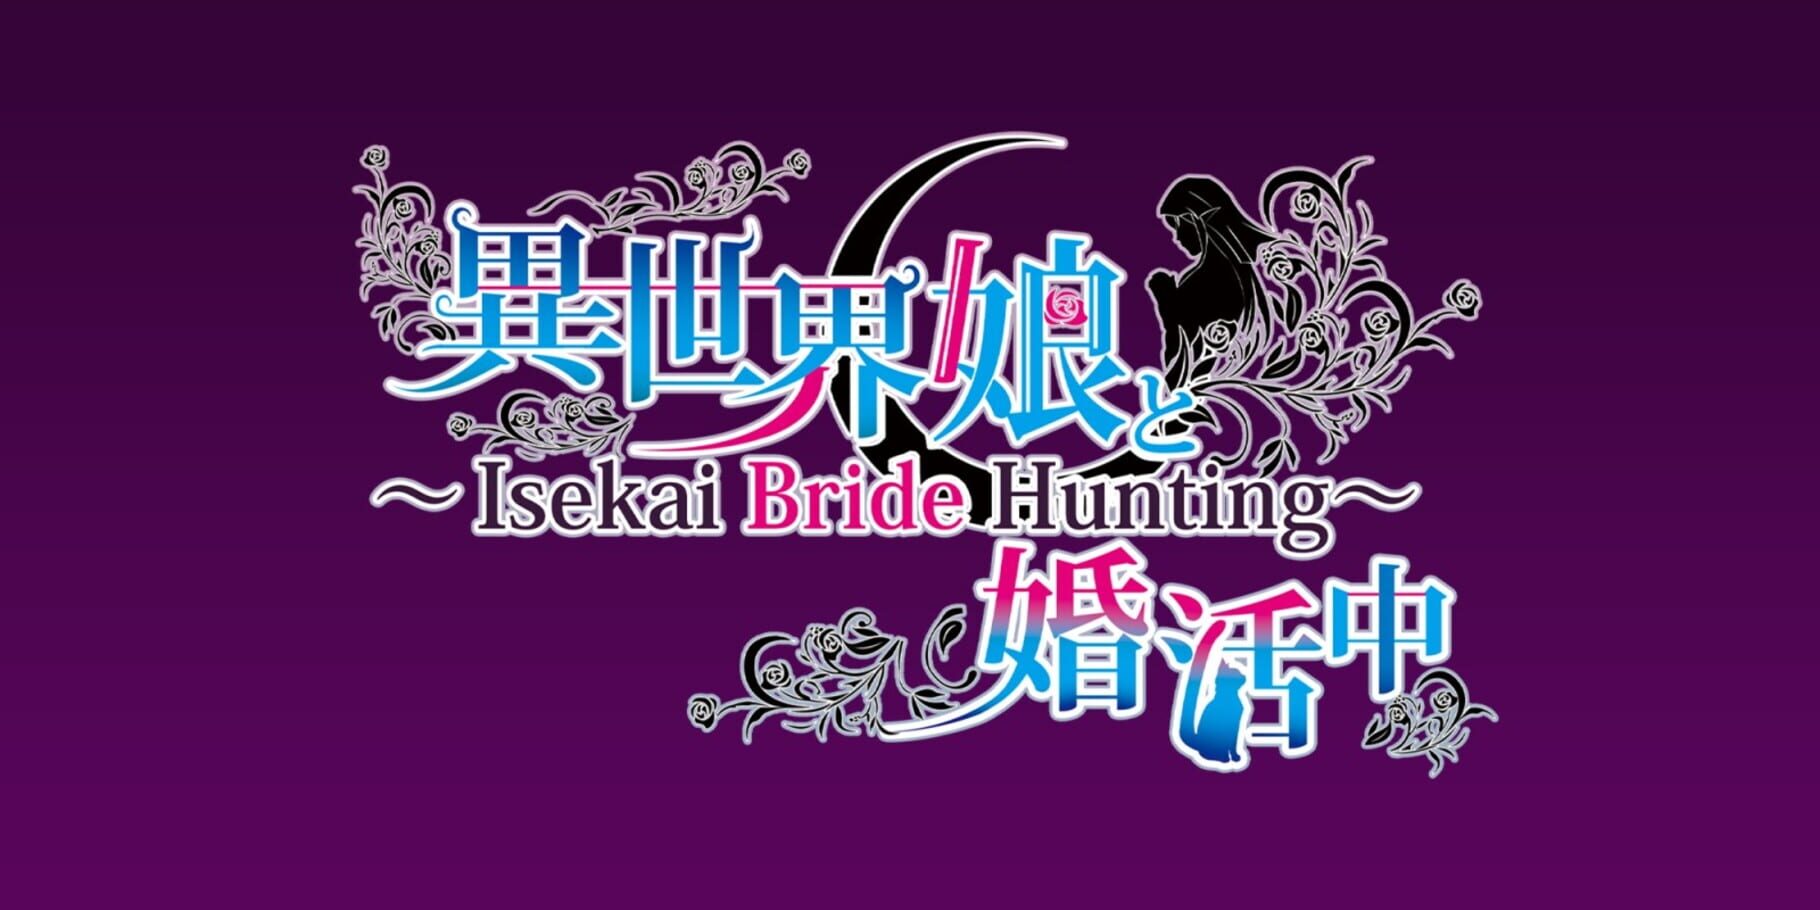 Isekai Musume to Konkatsuchuu: Isekai Bride Hunting artwork